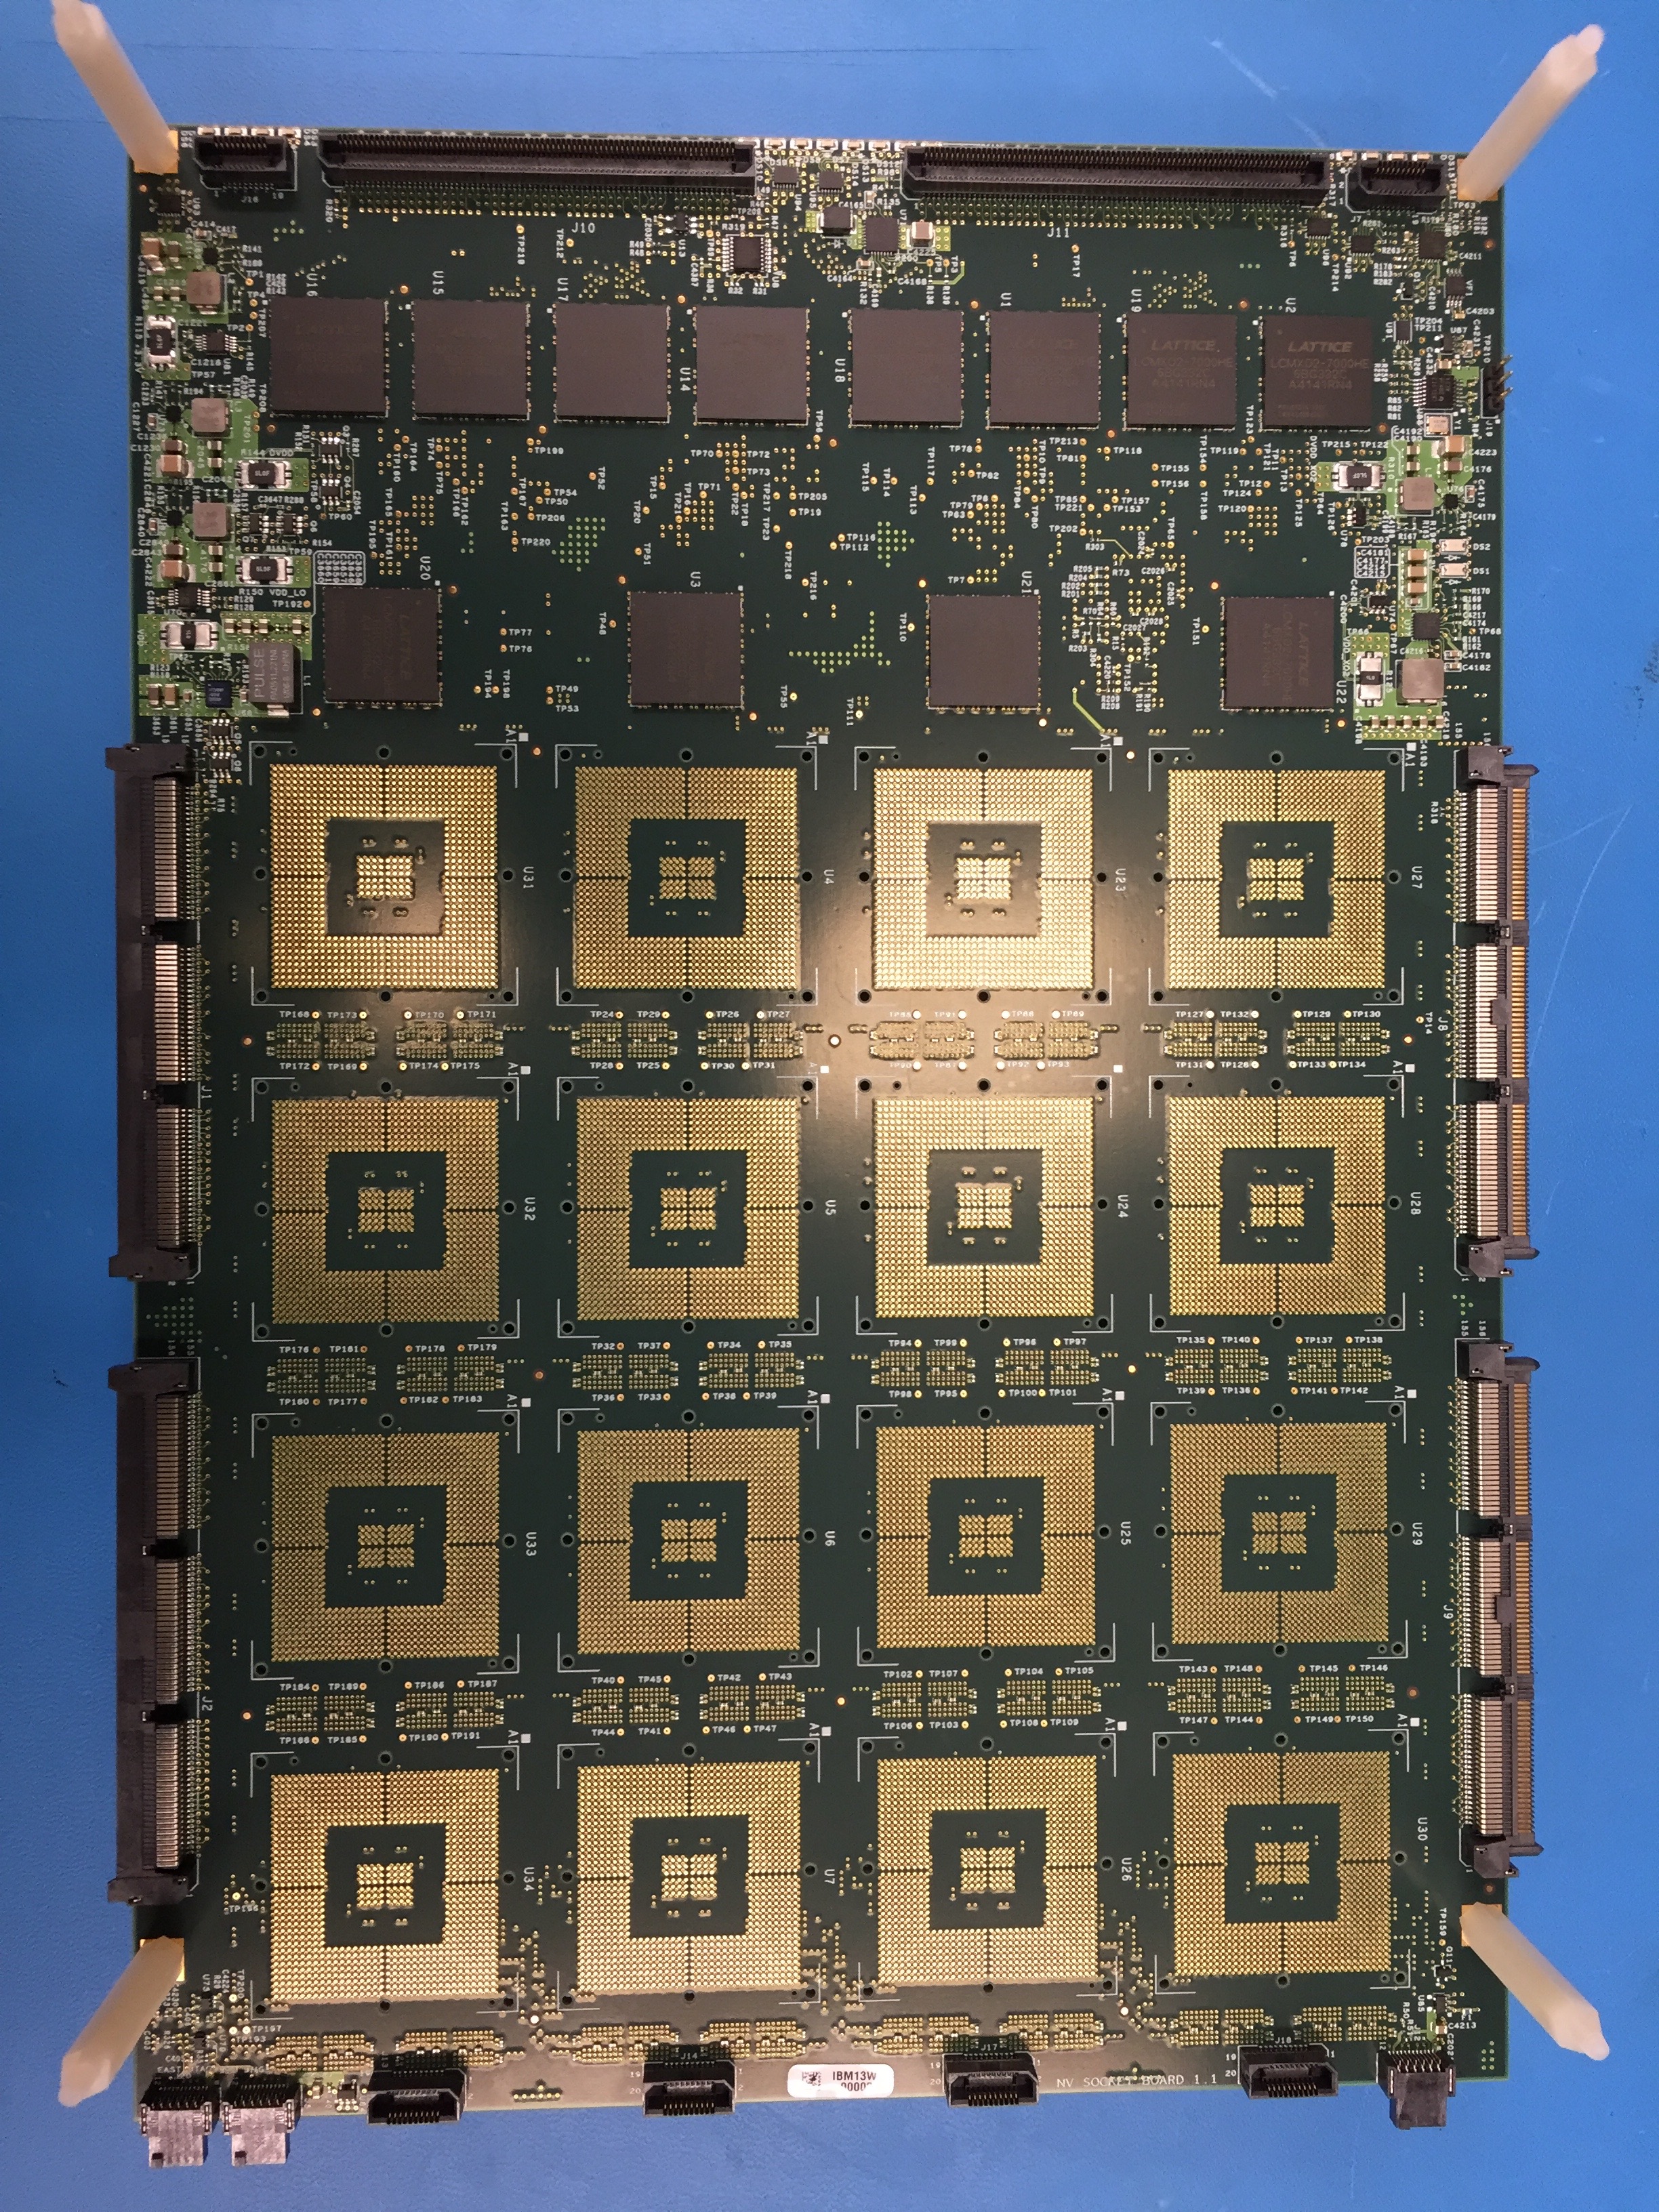 Top of 4×4 board